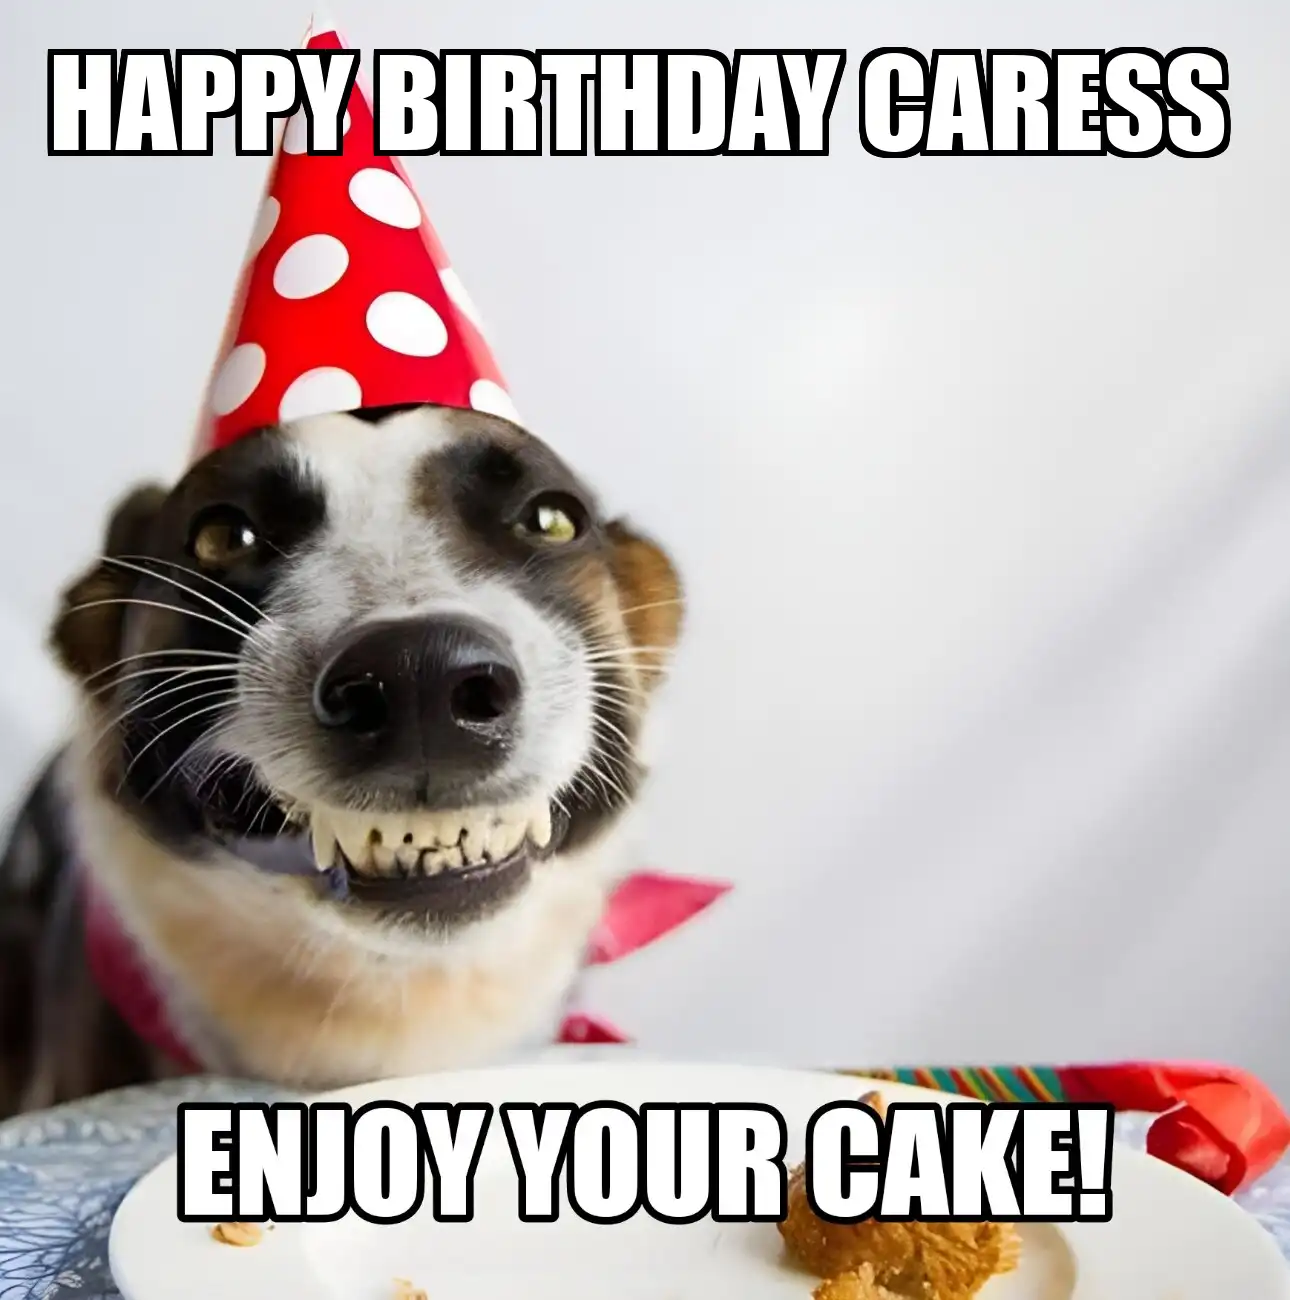 Happy Birthday Caress Enjoy Your Cake Dog Meme